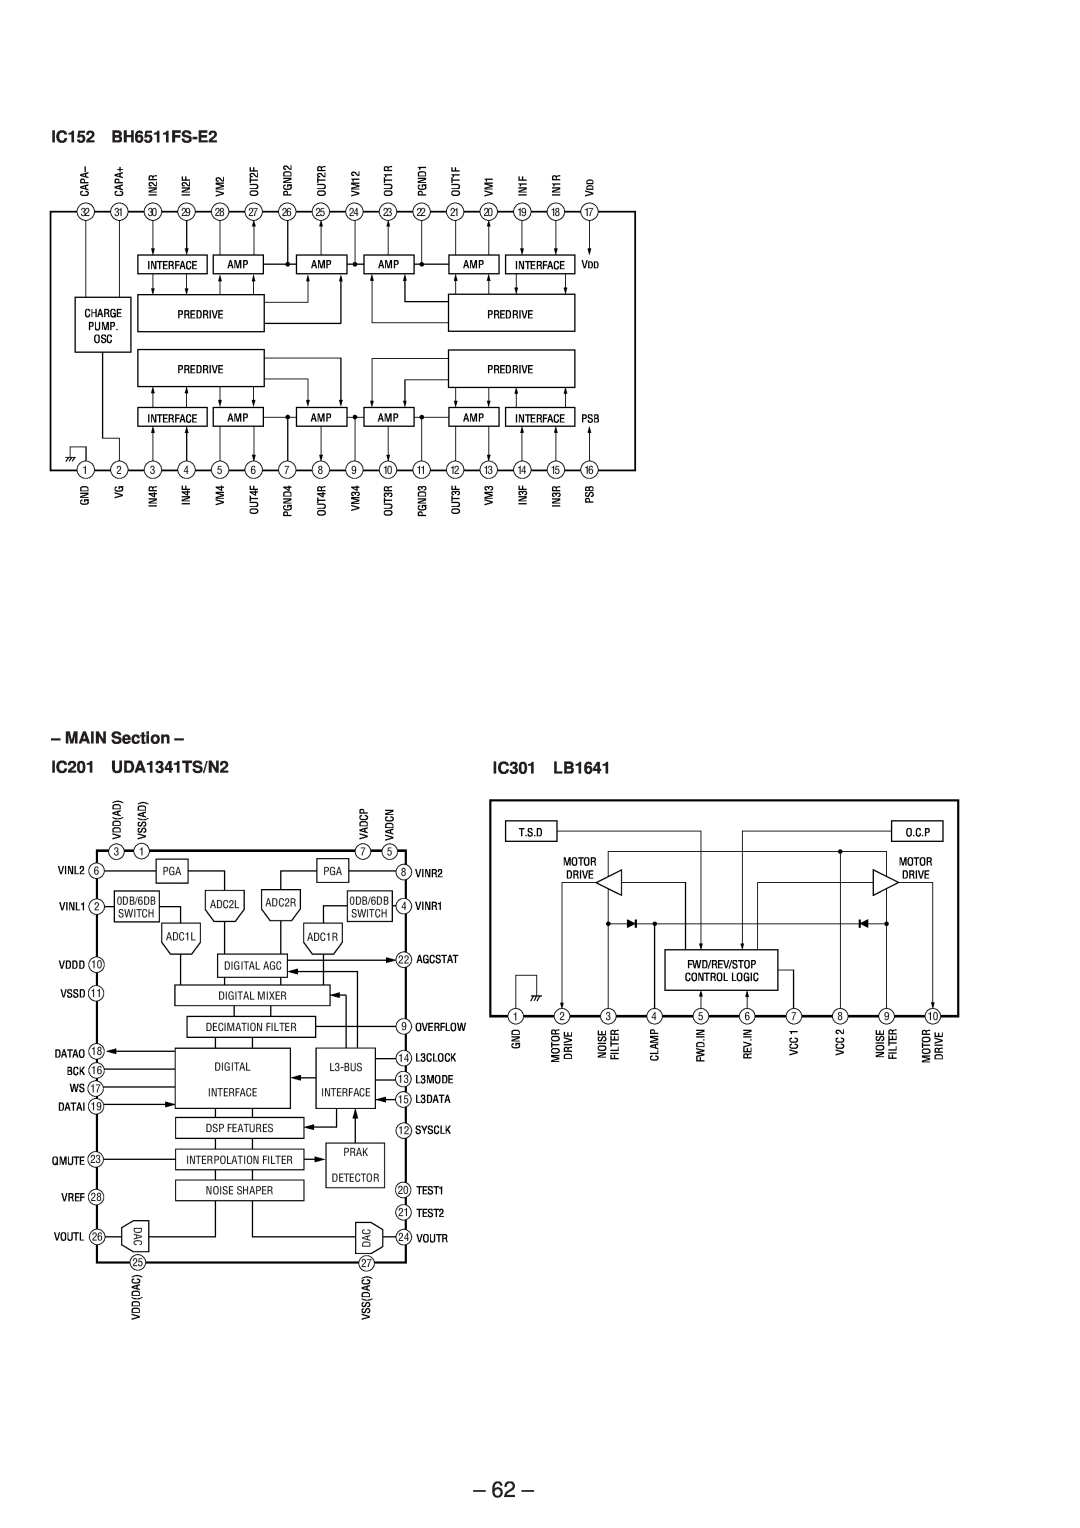 Sony MDS-SD1 service manual IC152, BH6511FS-E2, MAIN Section, IC201, UDA1341TS/N2, IC301, LB1641 